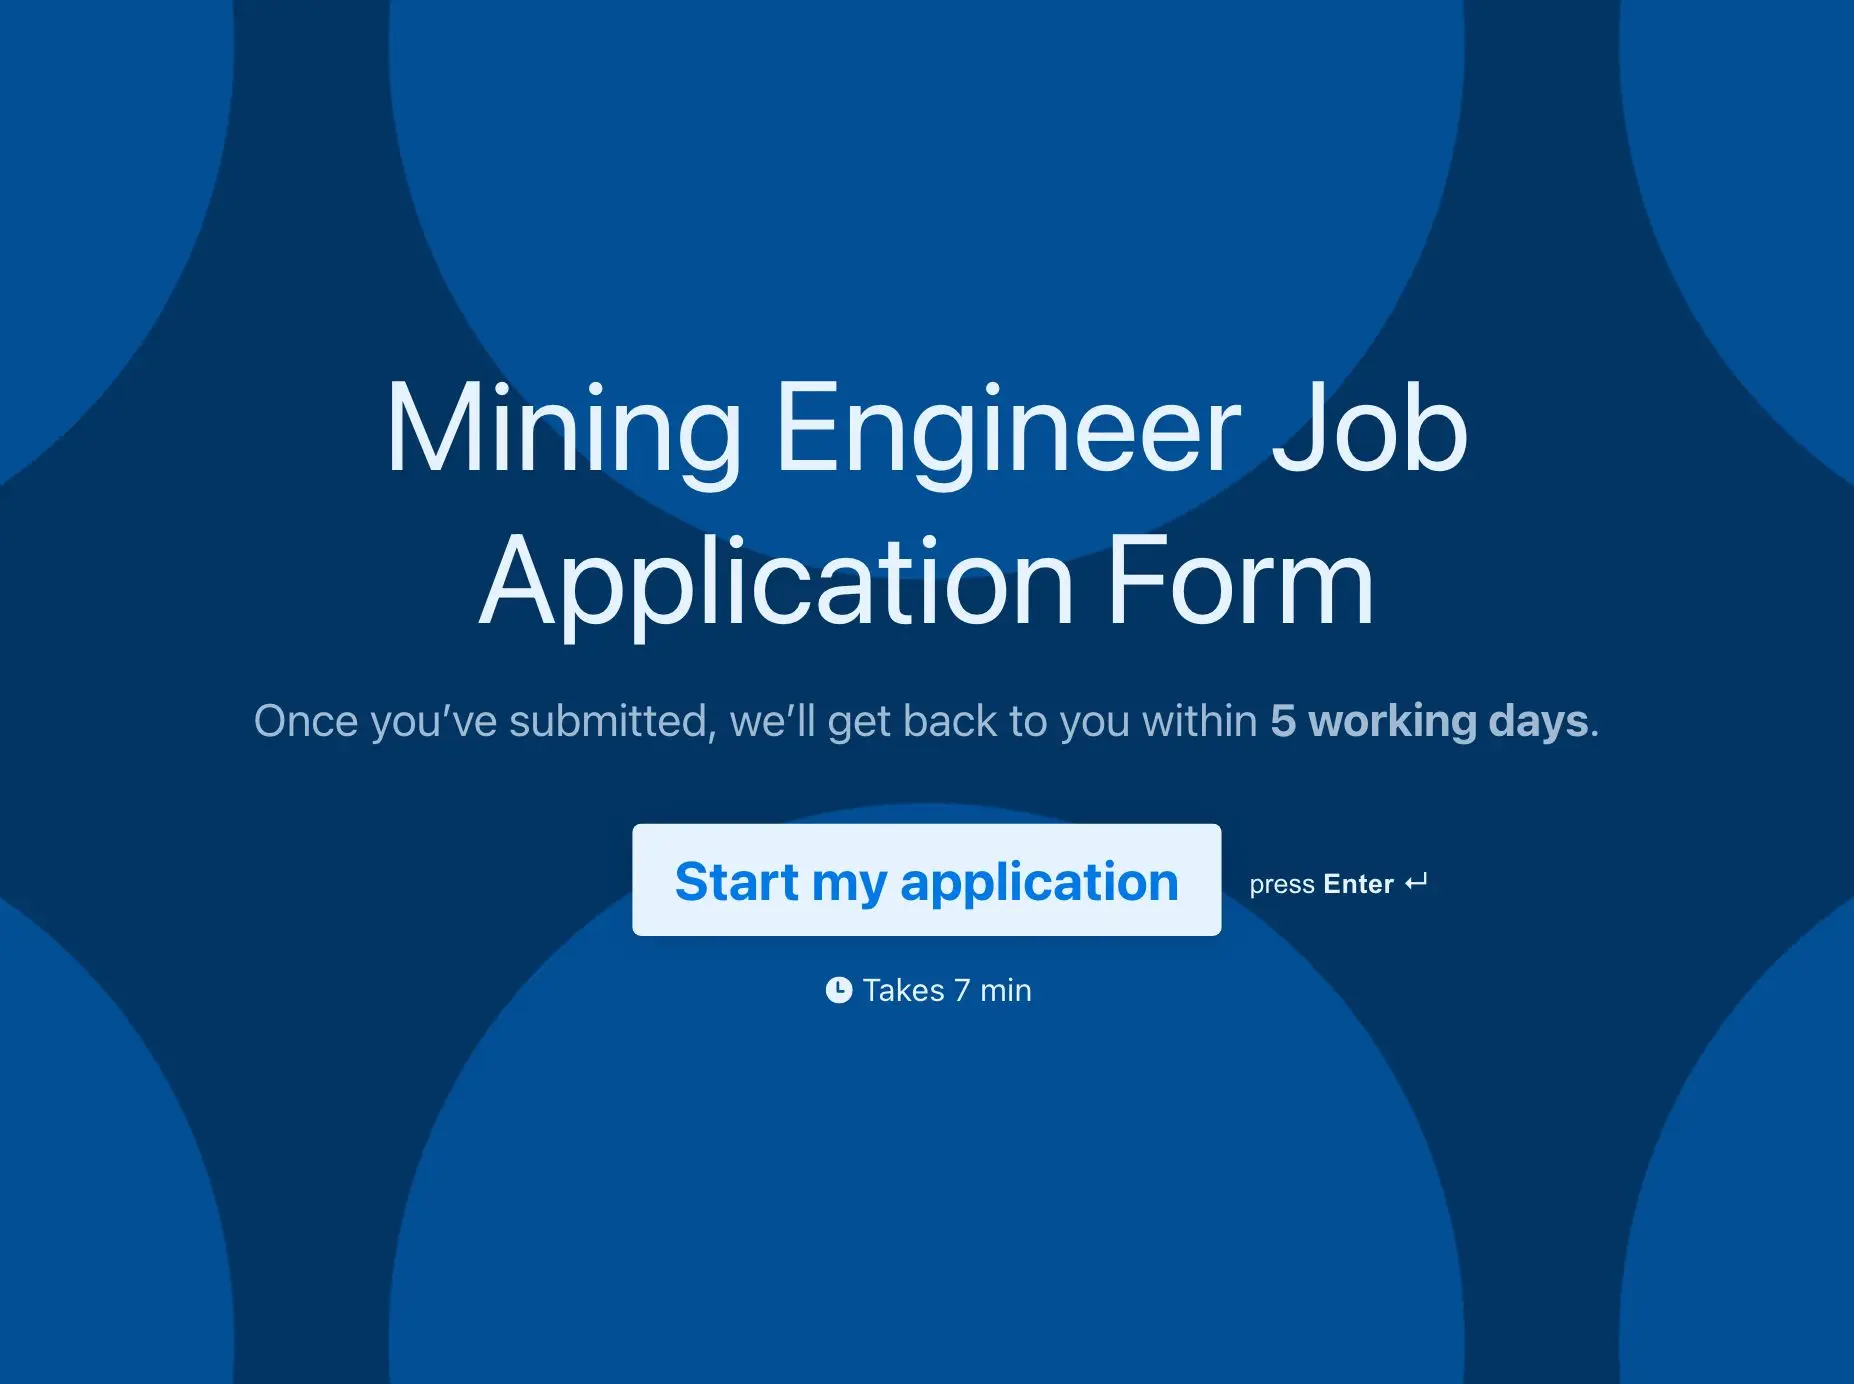 Mining Engineer Job Application Form Template Hero